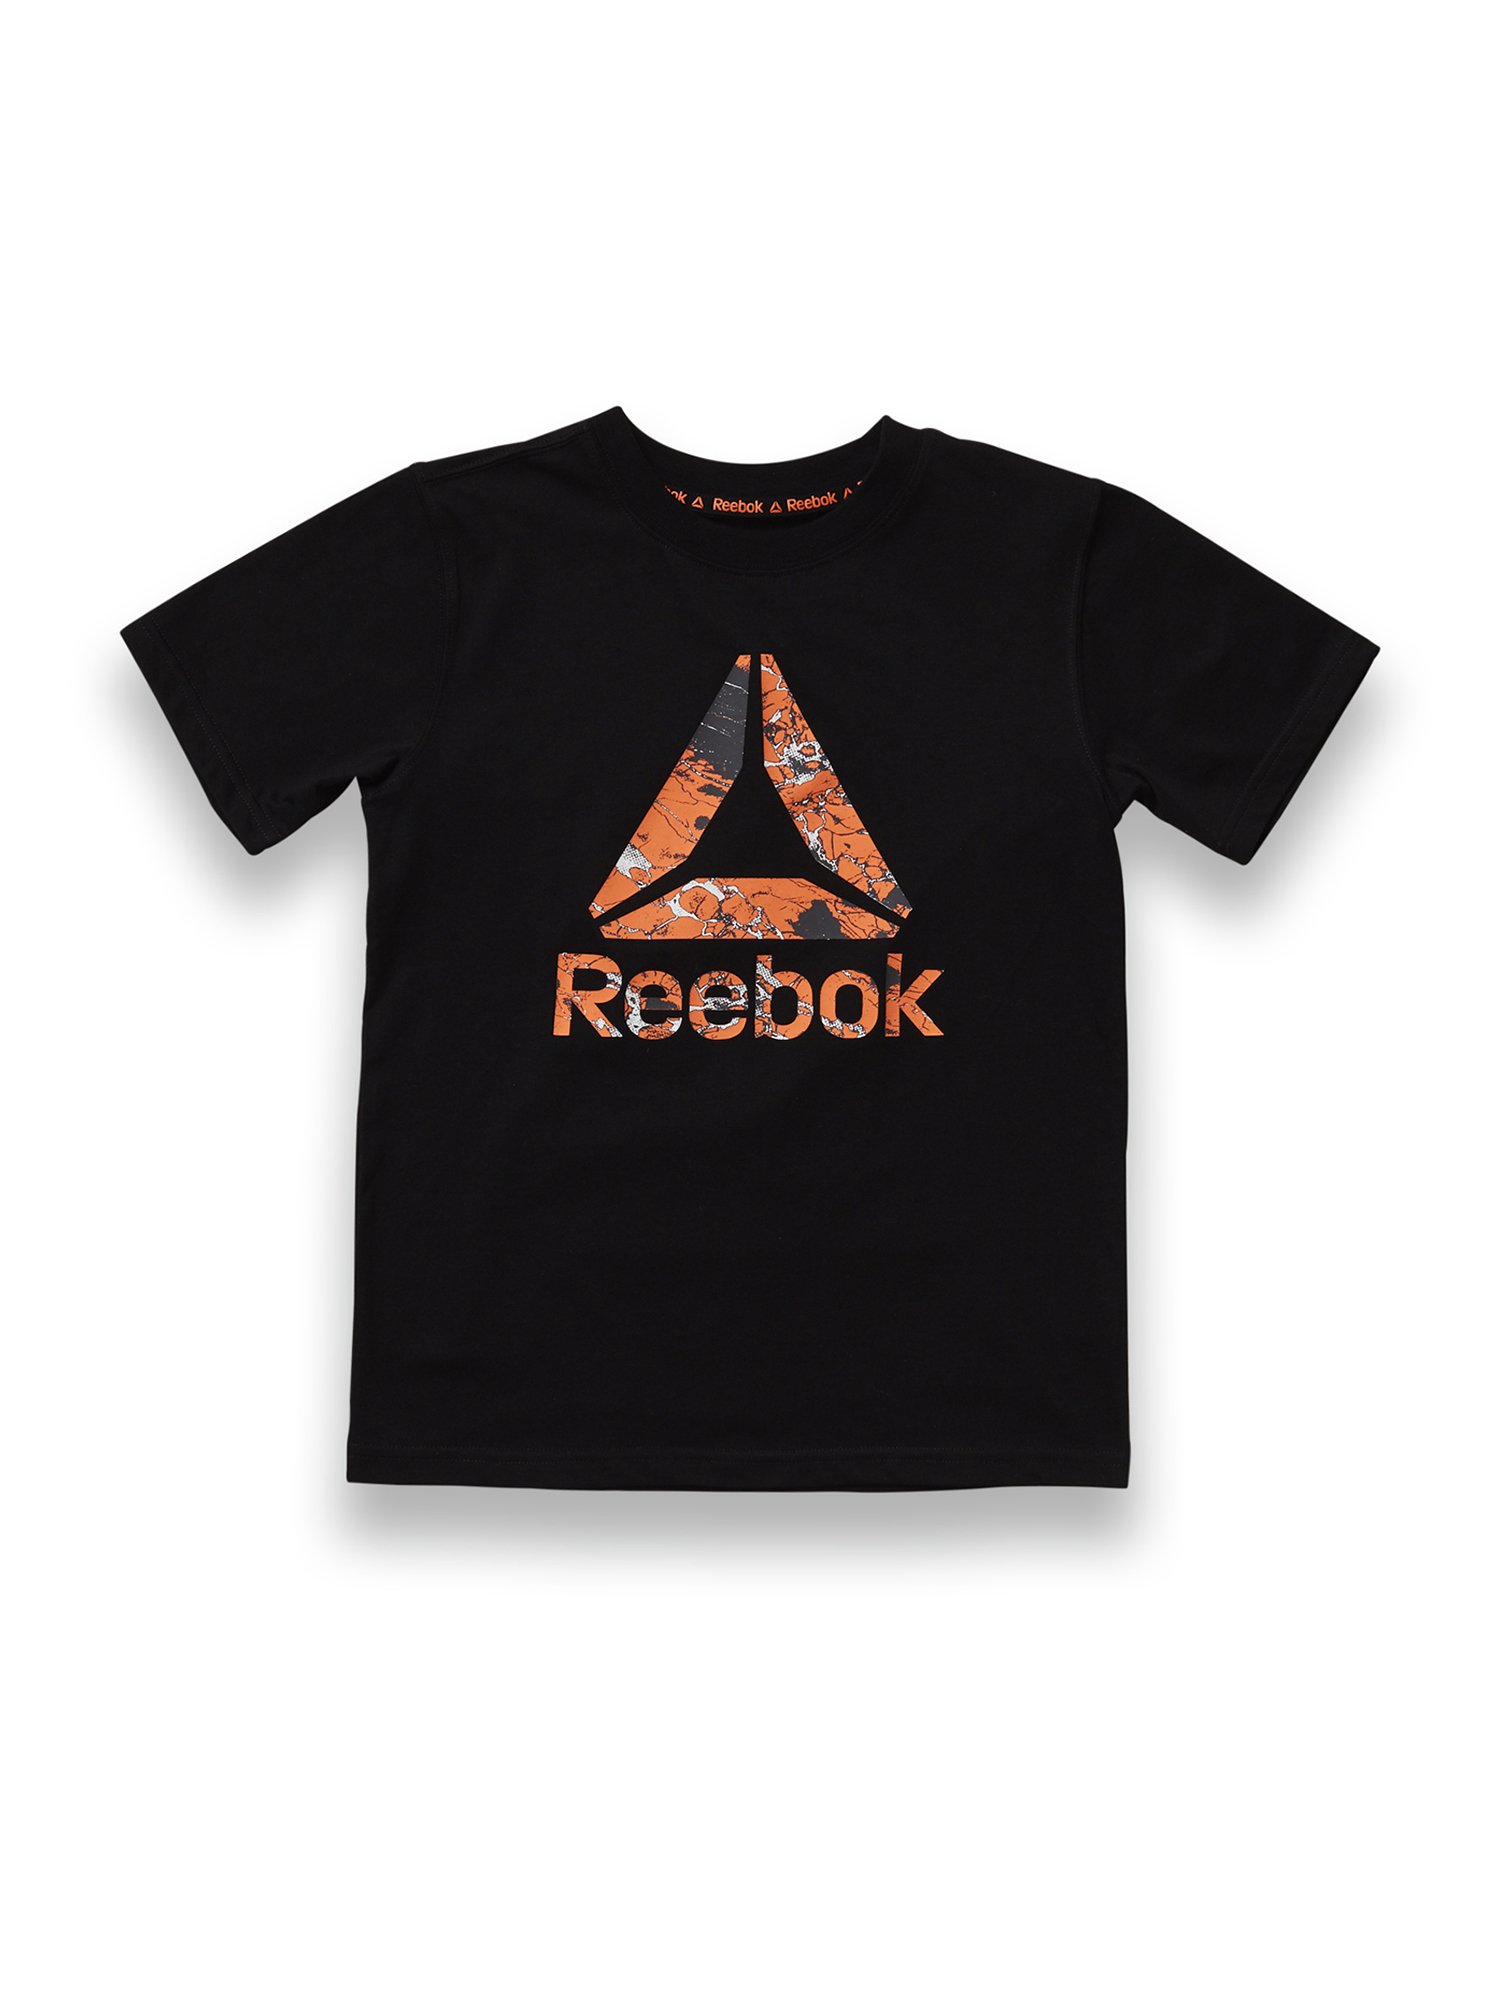 Reebok Boys Short Sleeve Graphic 2-Pack T-Shirts, Size 4-18 - image 4 of 5